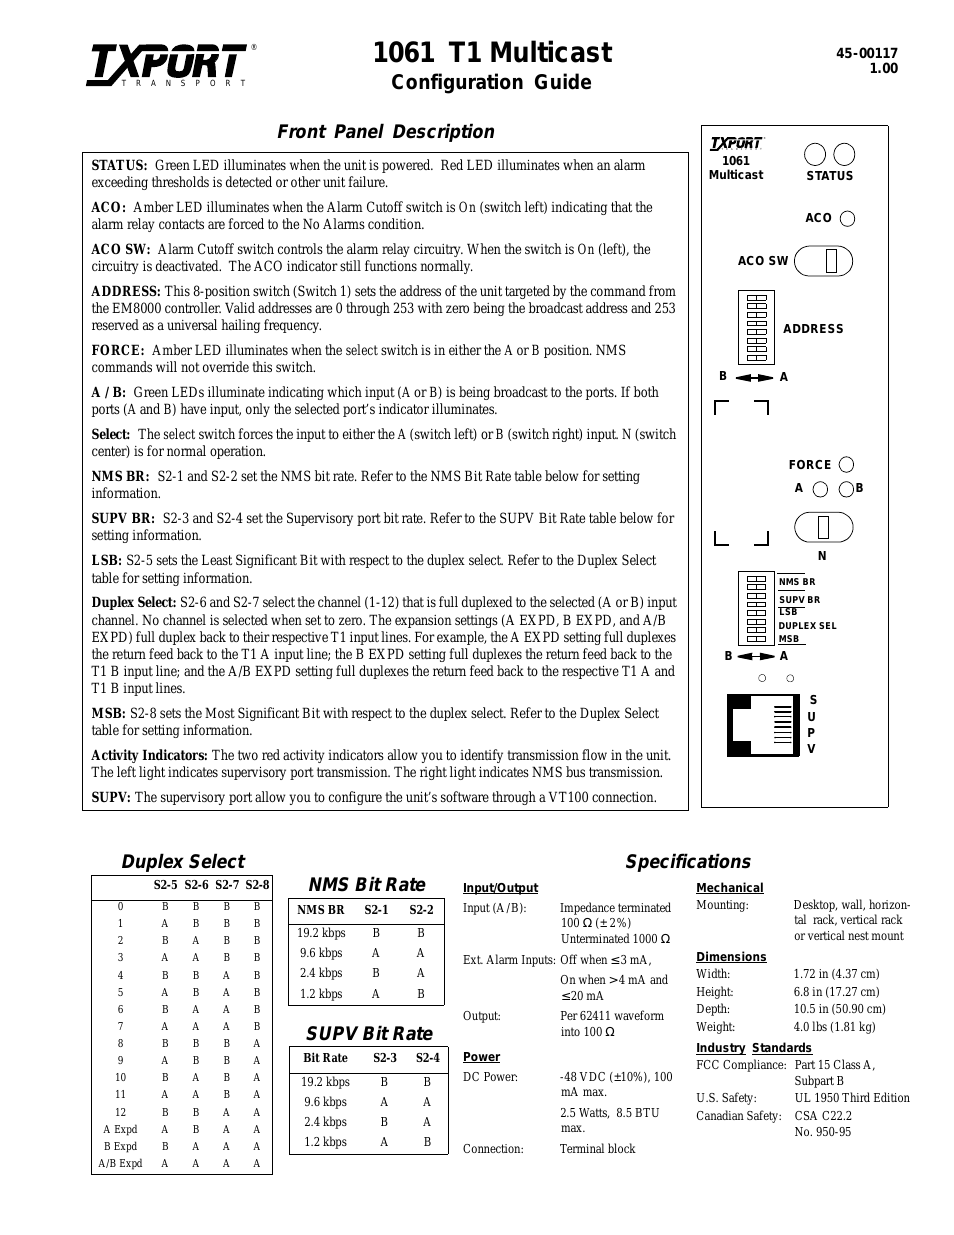 1061 Multicast Card (CG) Configuration/Installation Guide